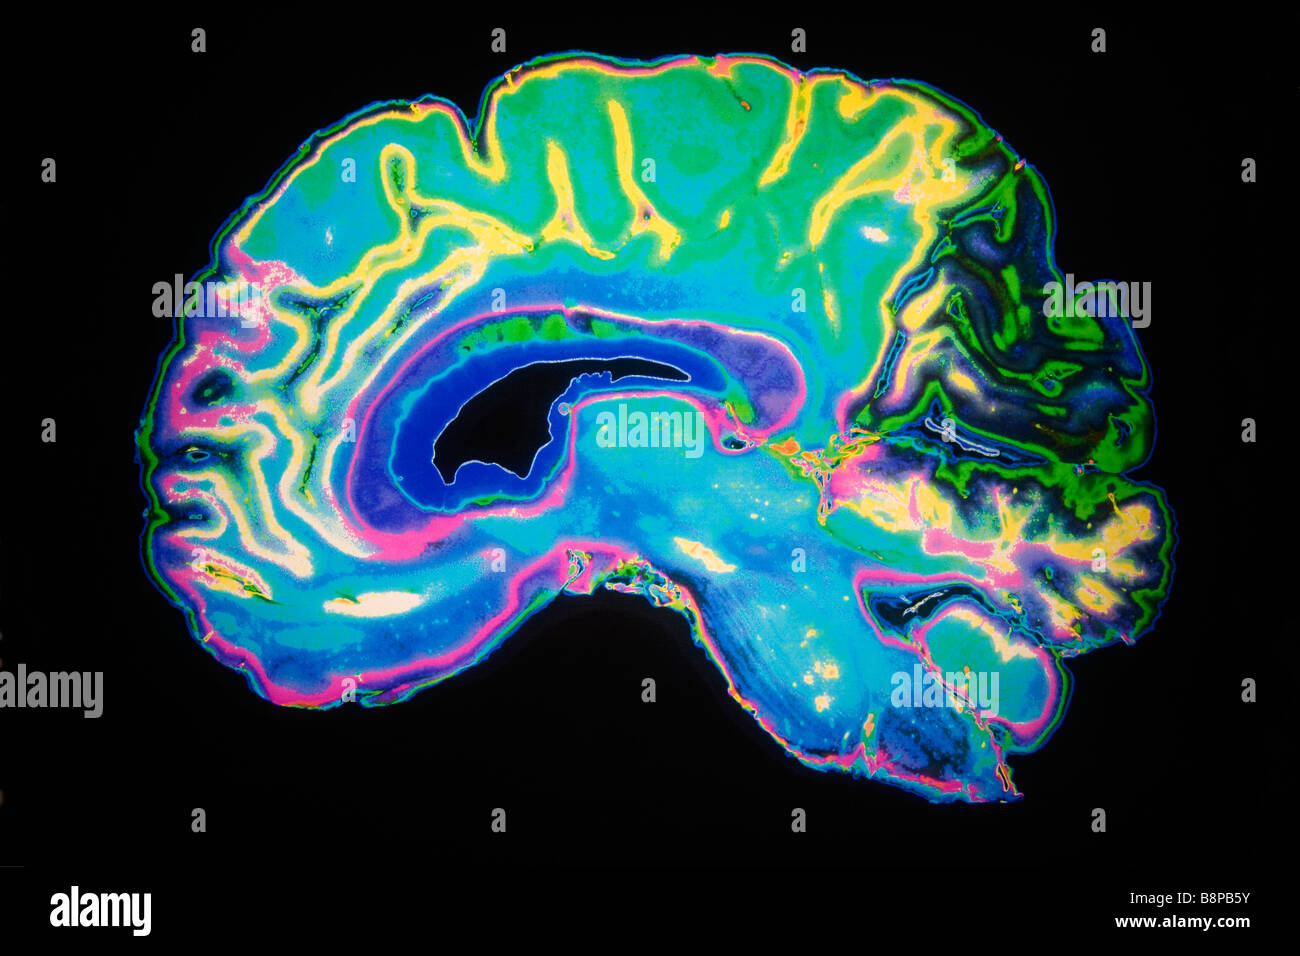 Artificially_Coloured_MRI_Scan_Of_Human_